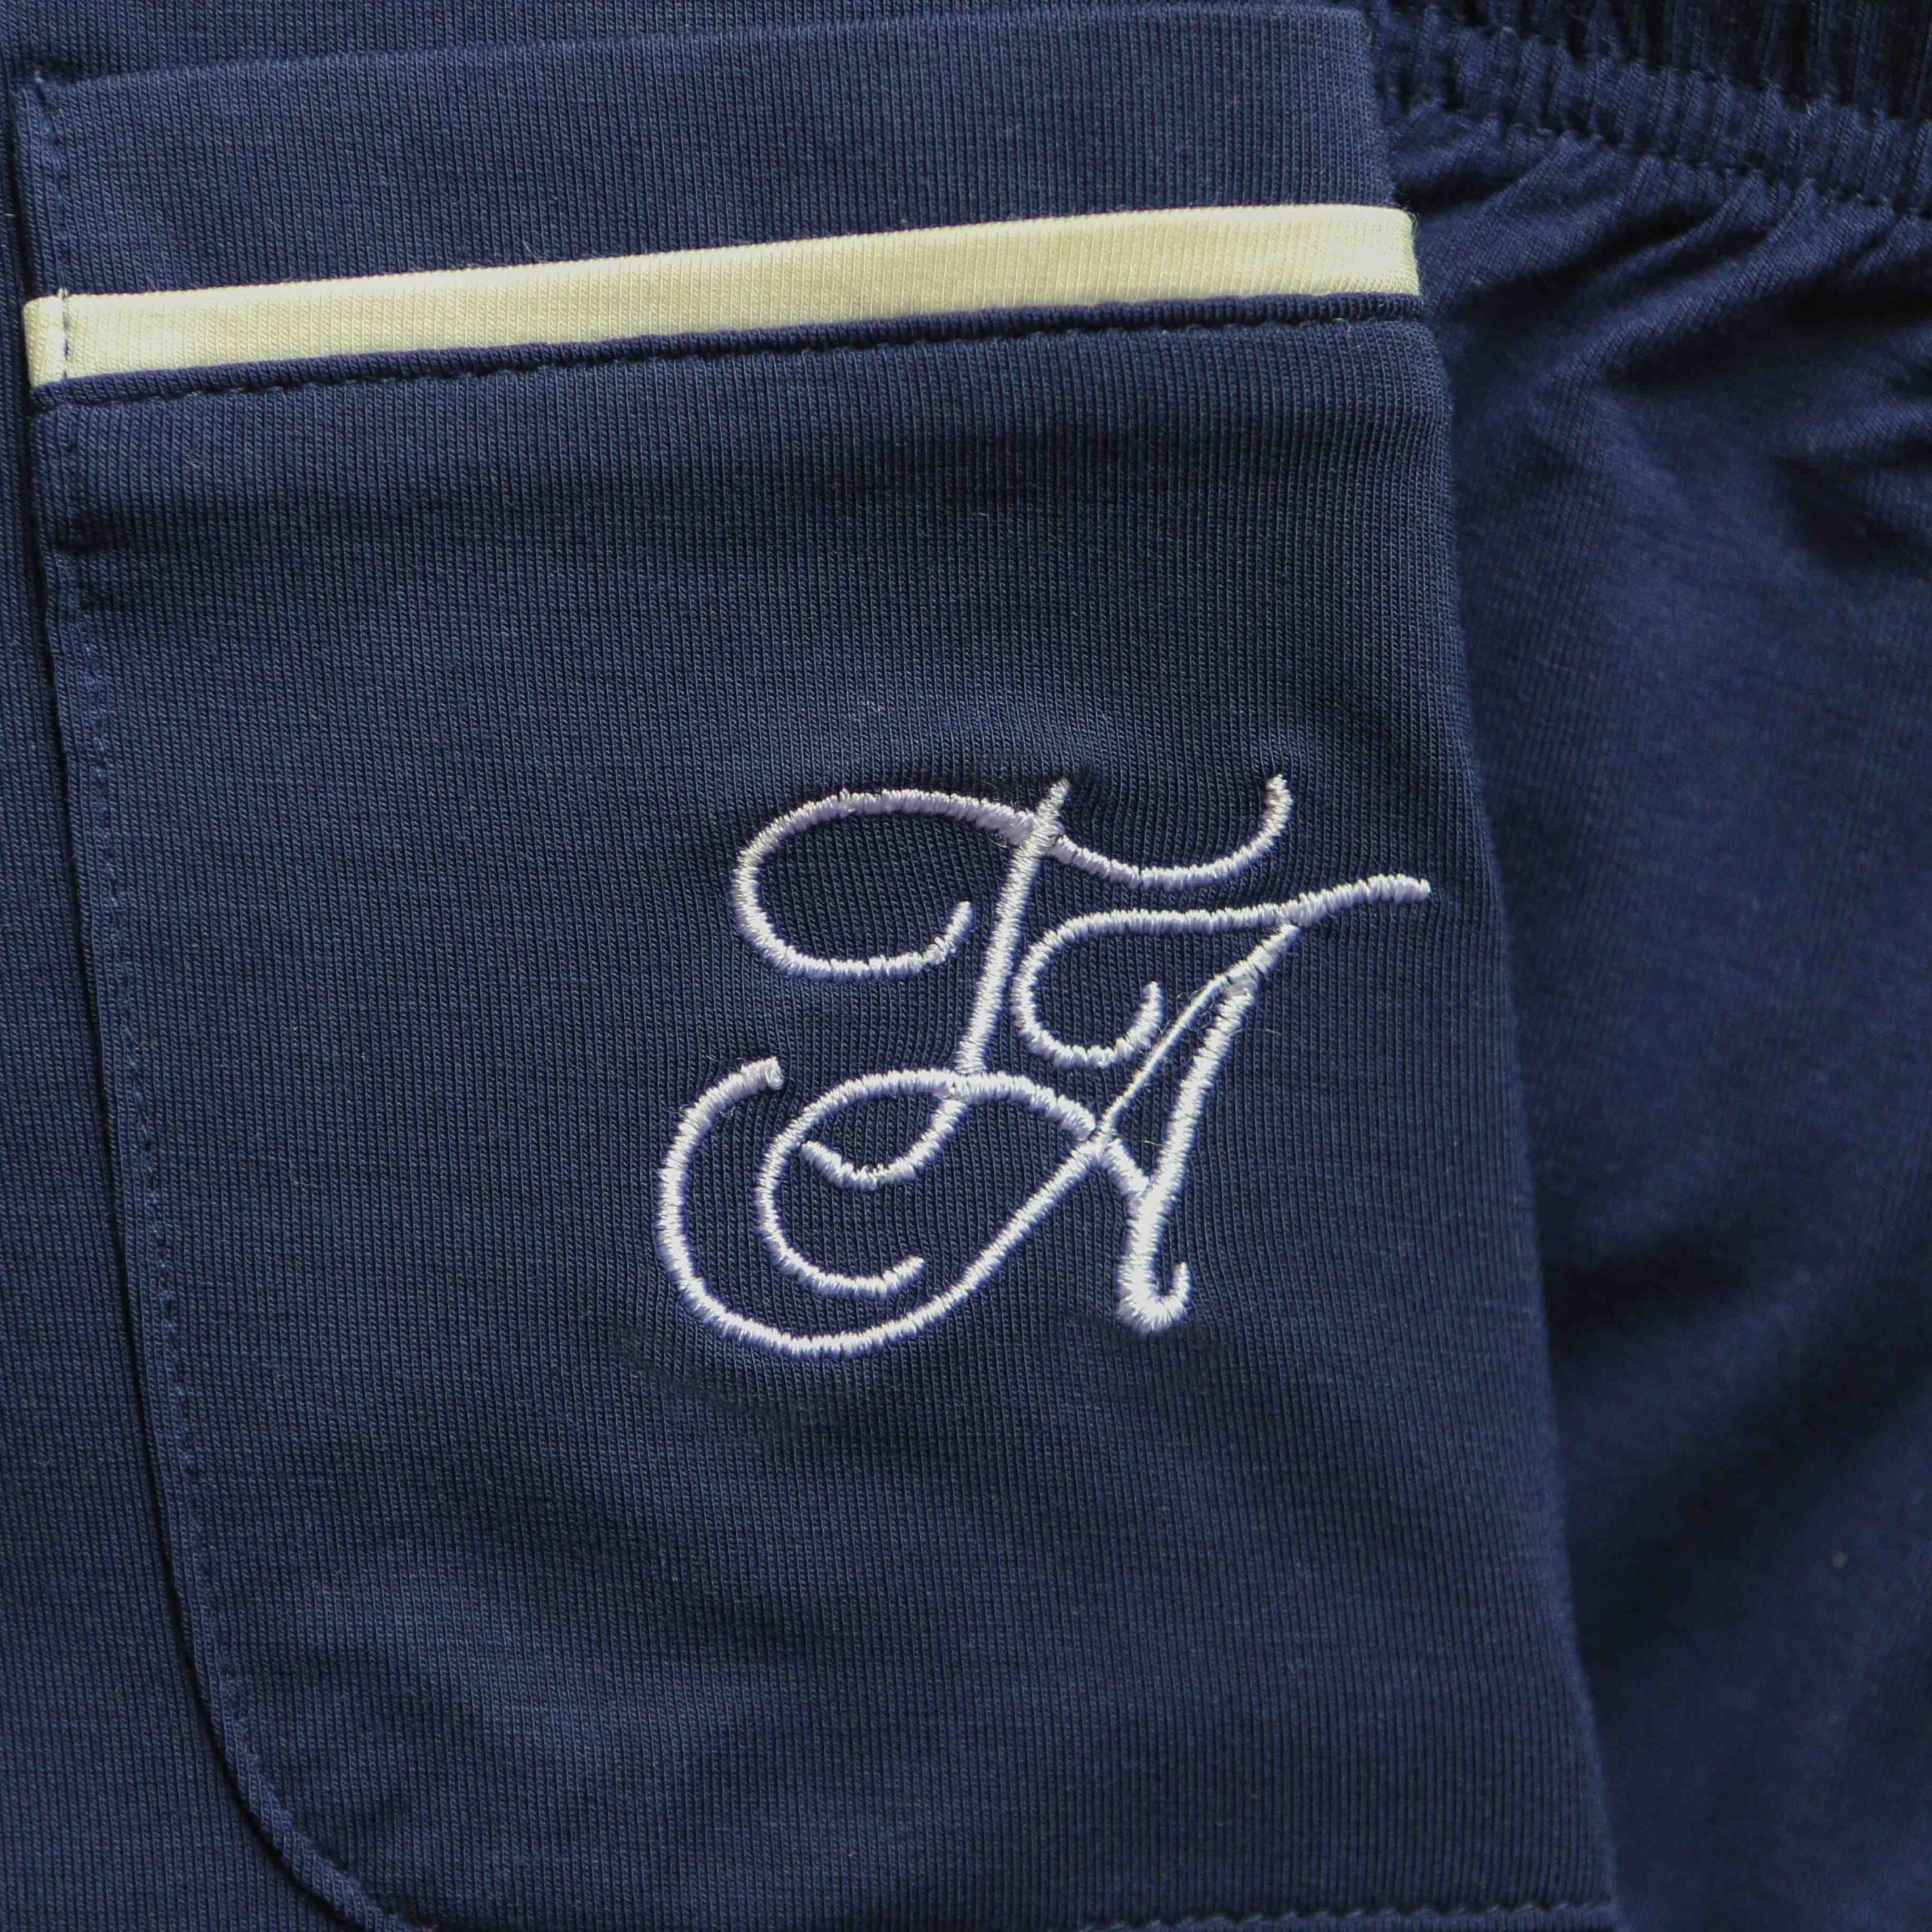 StephieAnn monogarmming initials name embroidery Brighton